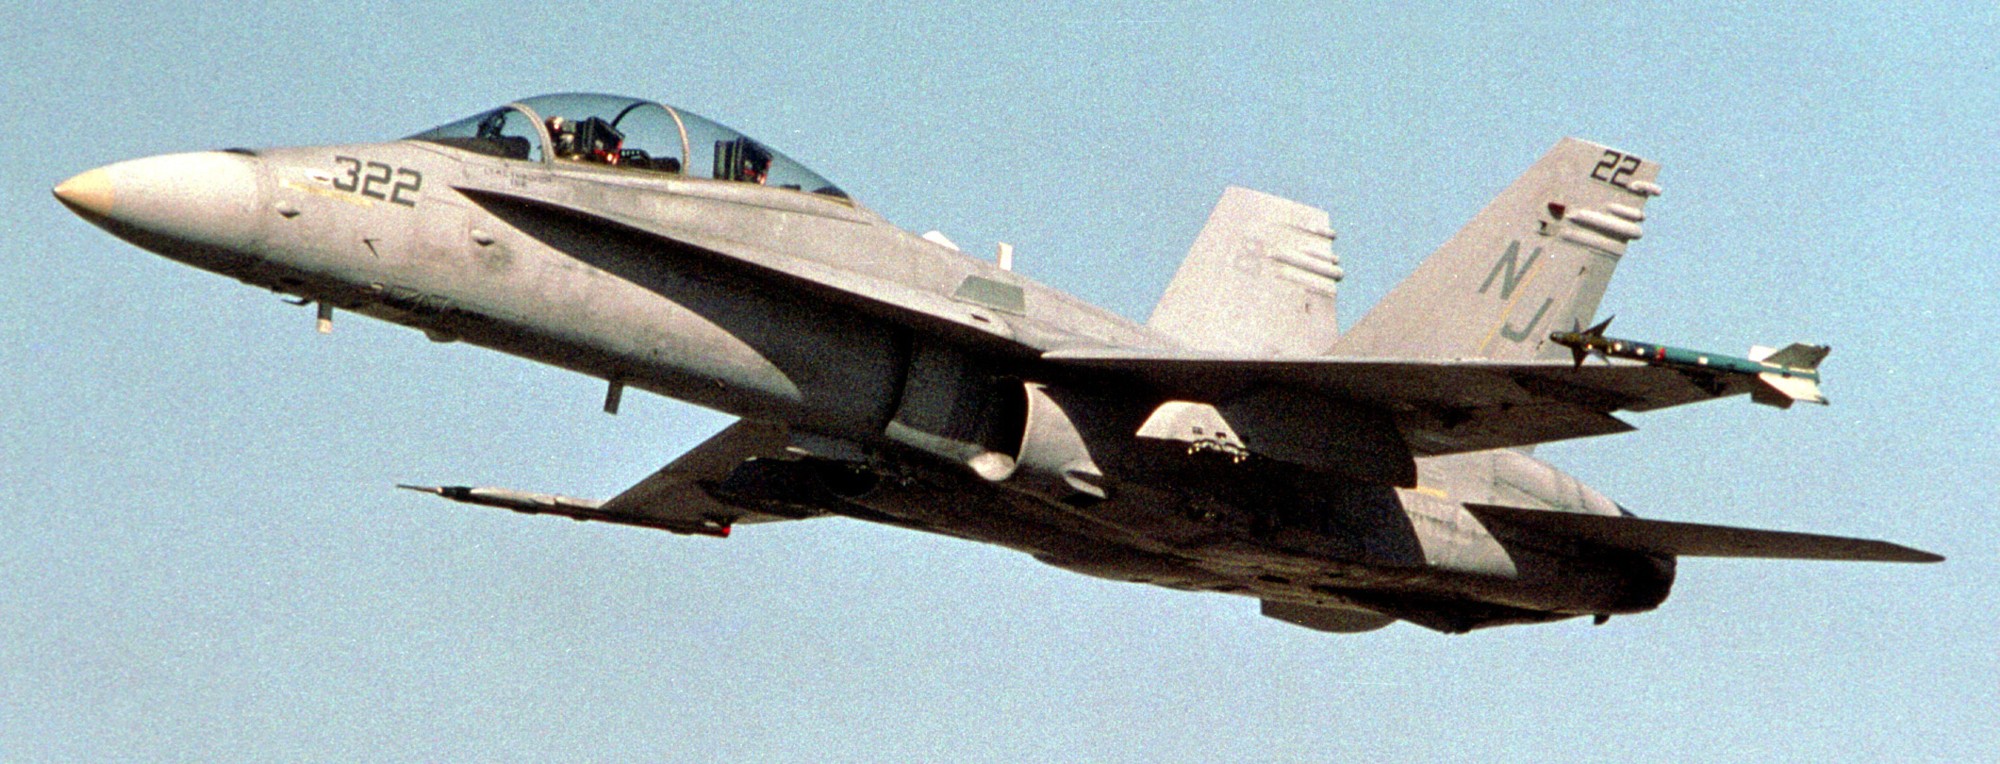 vfa-125 rough raiders strike fighter squadron f/a-18a hornet 1993 50